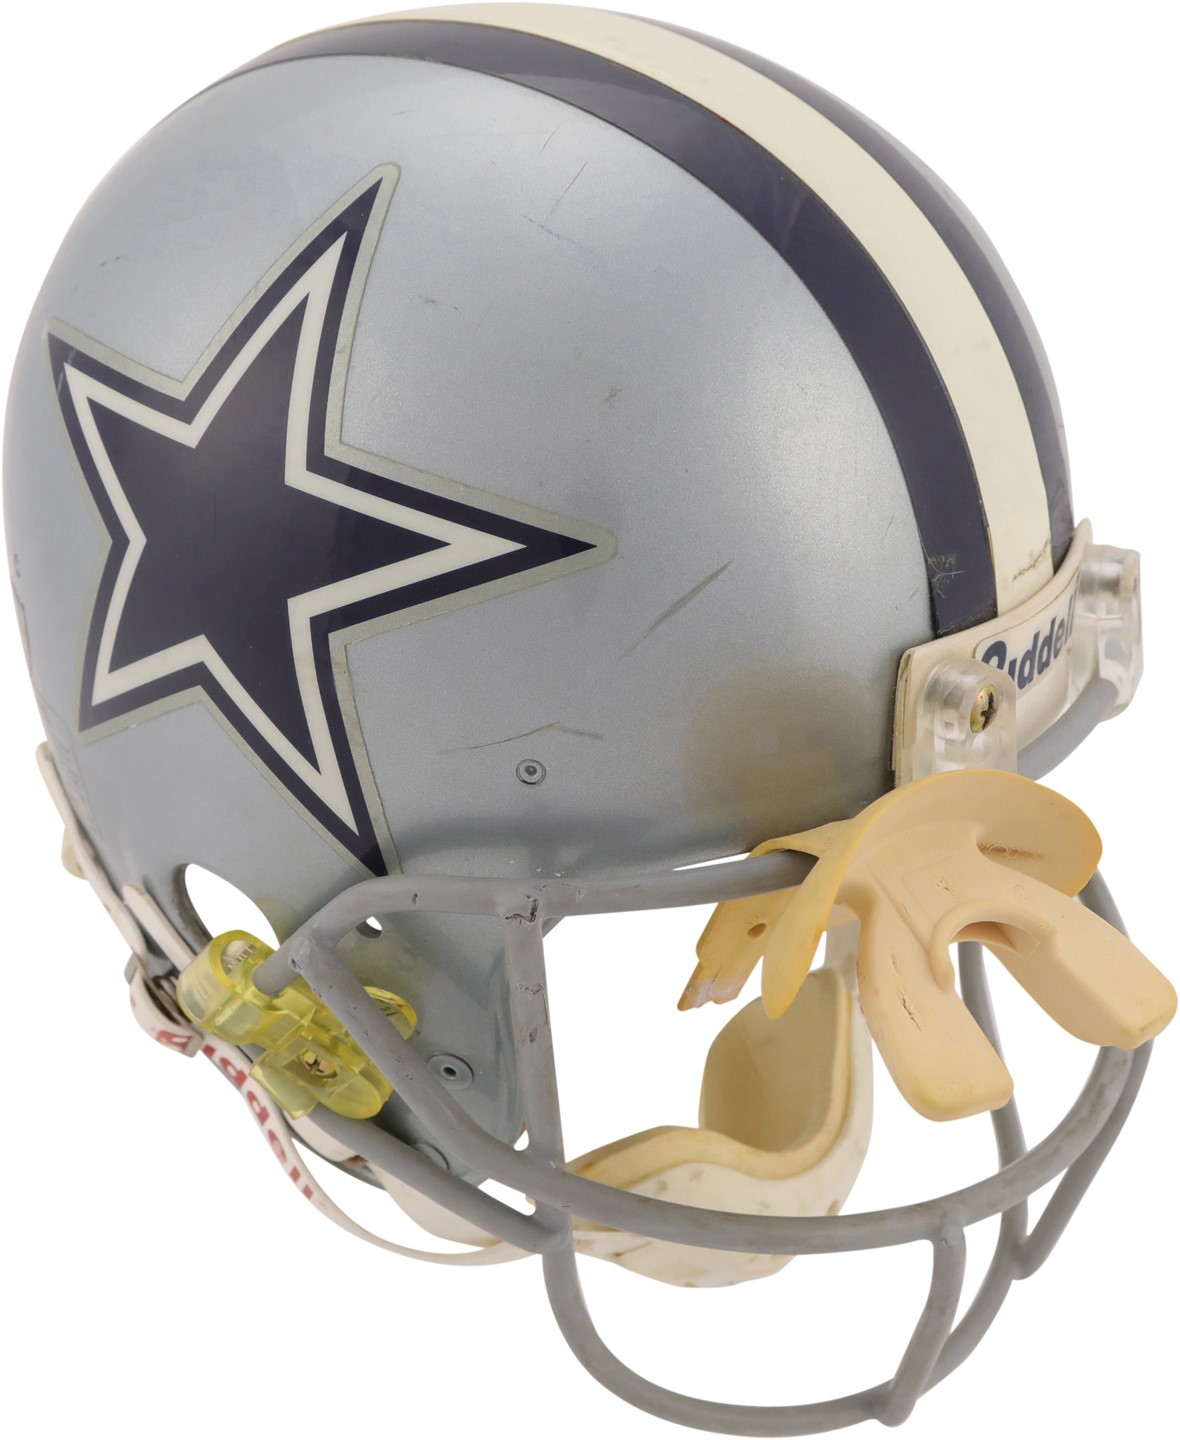 Circa 1998 Michael Irvin Dallas Cowboys Game Worn Helmet (Tony Dorsett Letter)